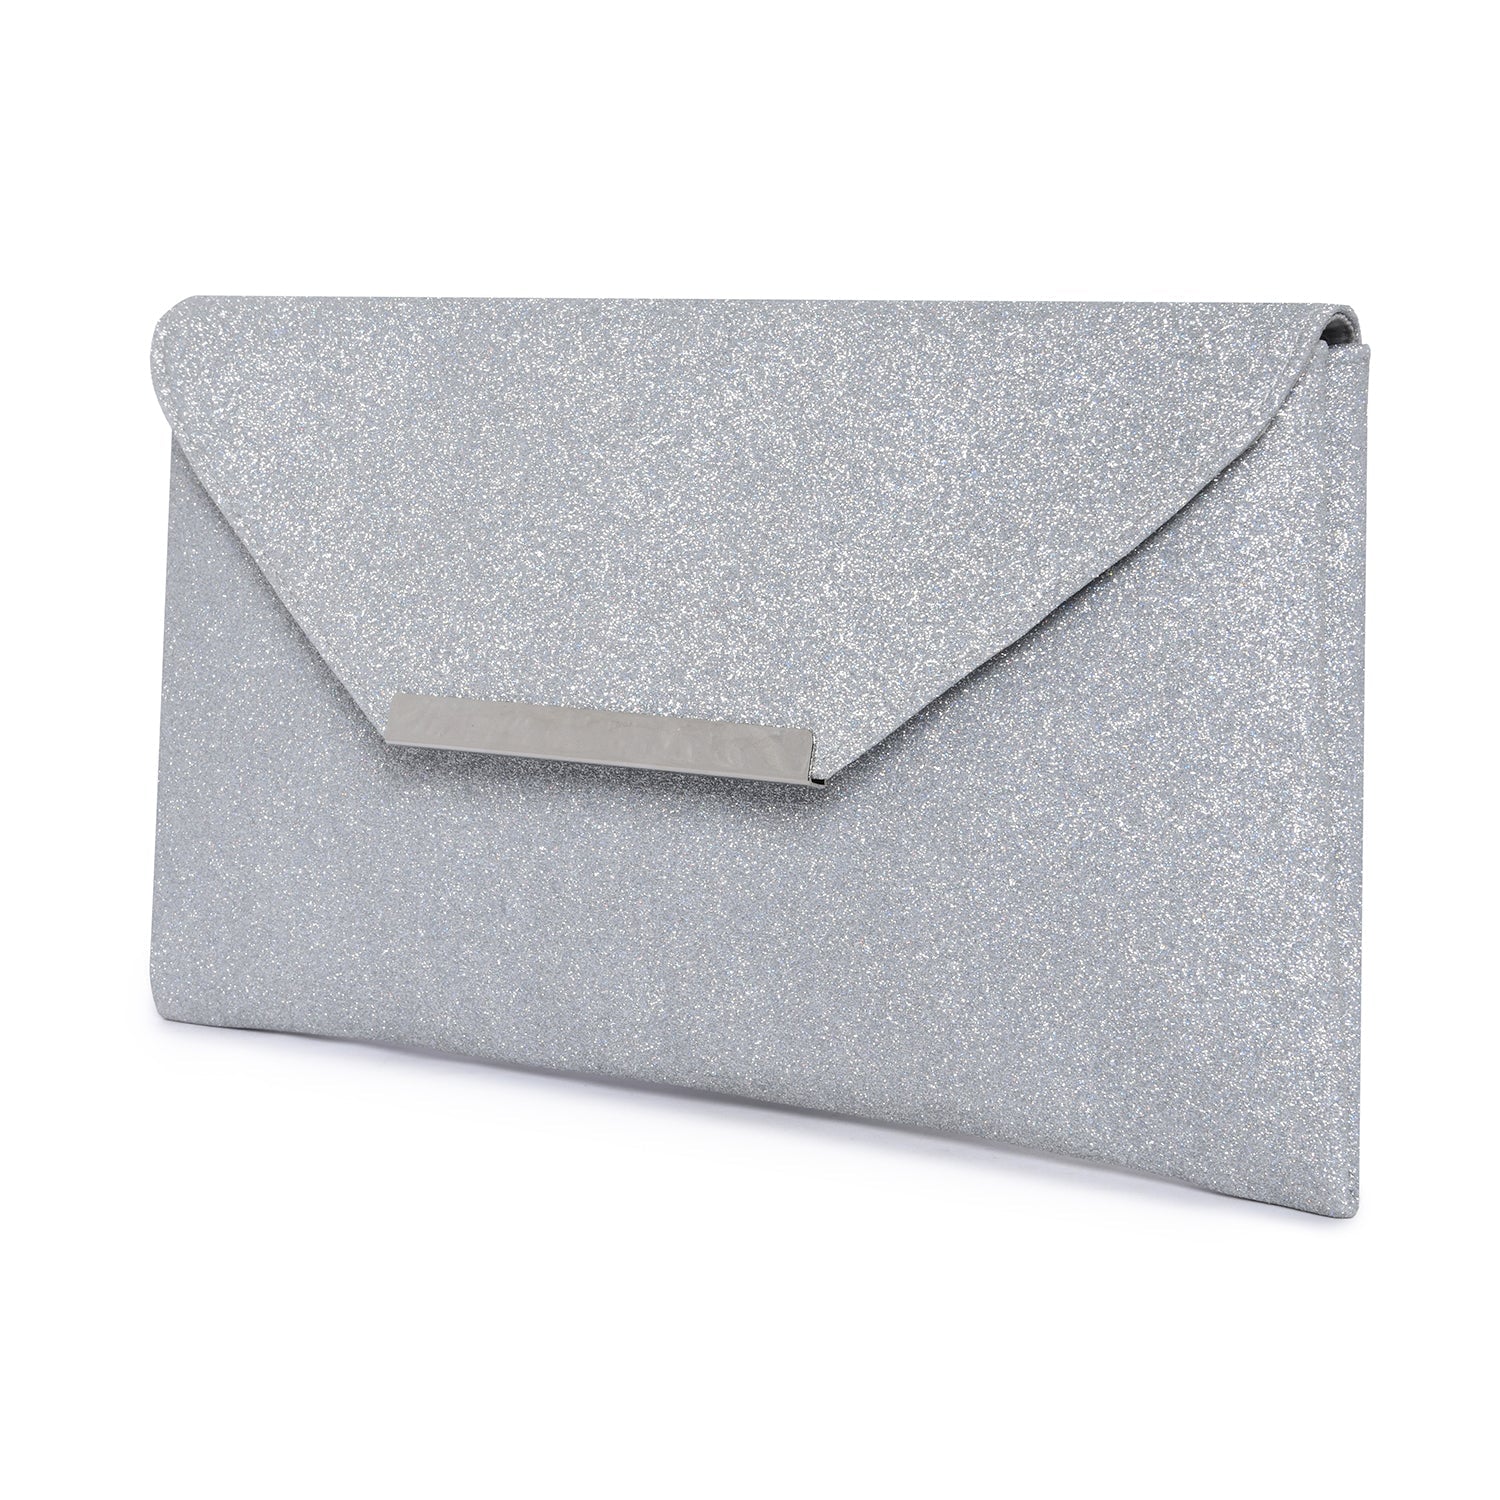 Accessorize London Women's Silver Foil PU Clutch Party bag